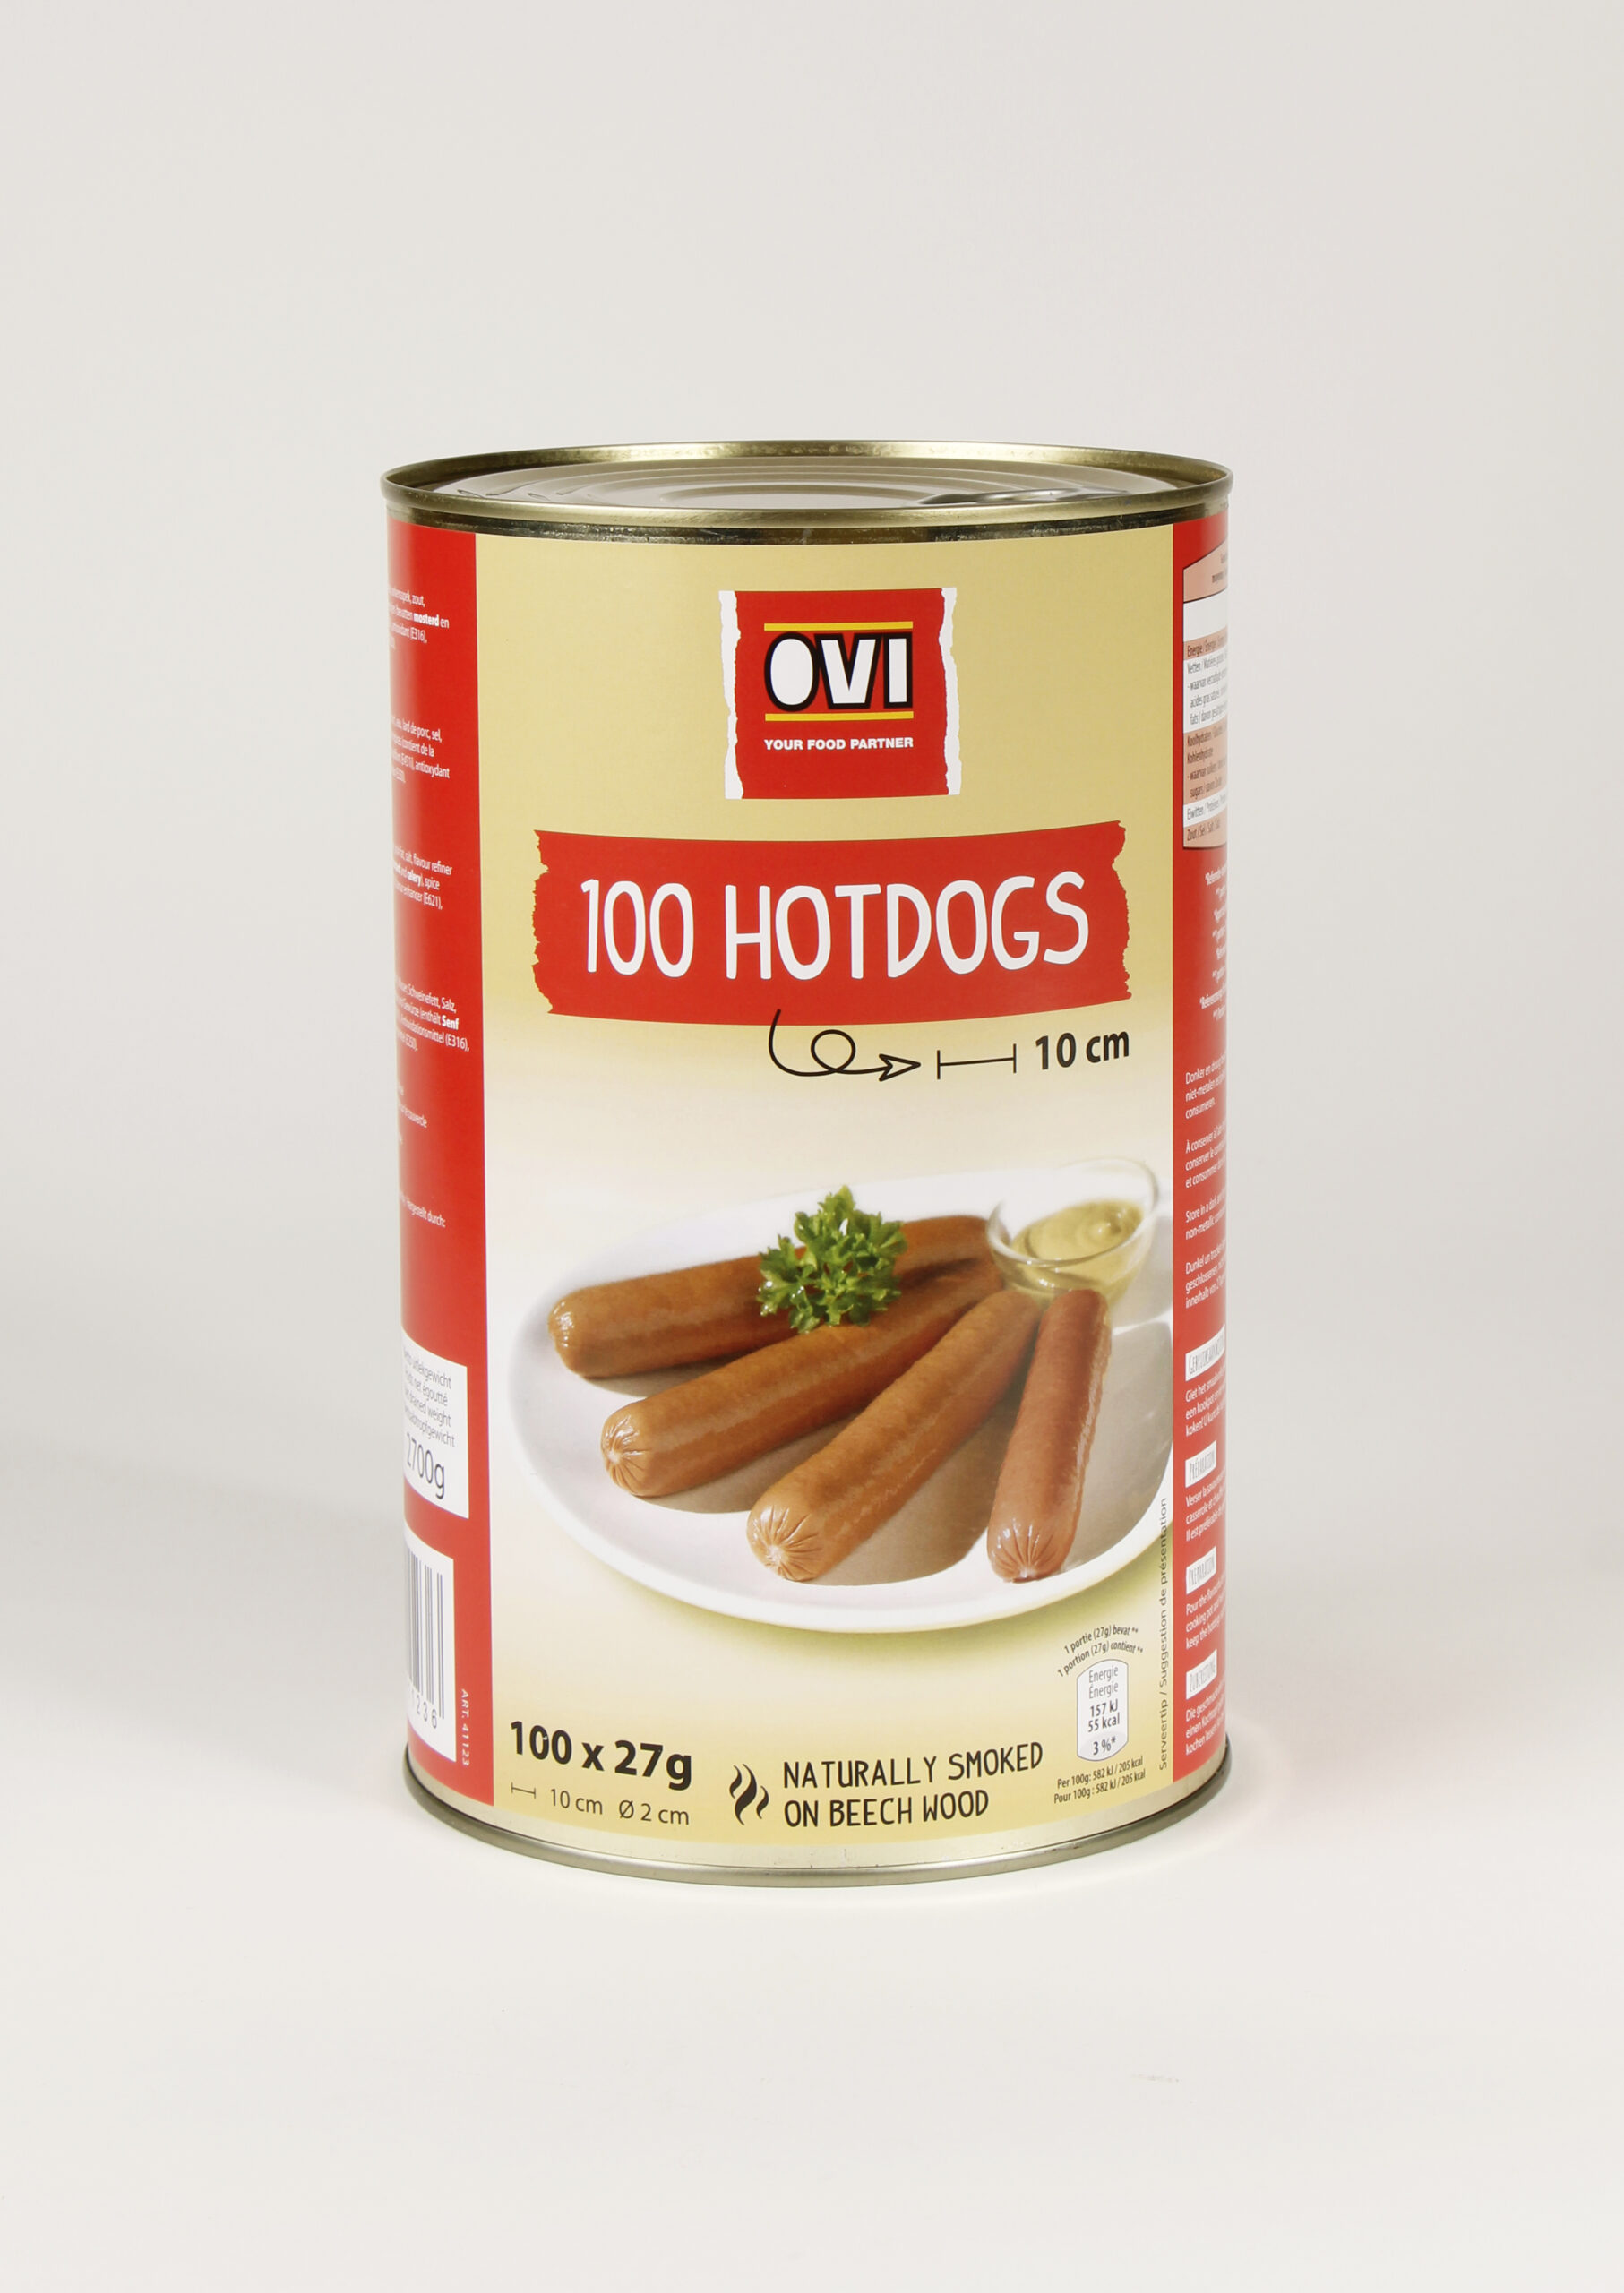 Hotdogs 100 x 27g blik OVI